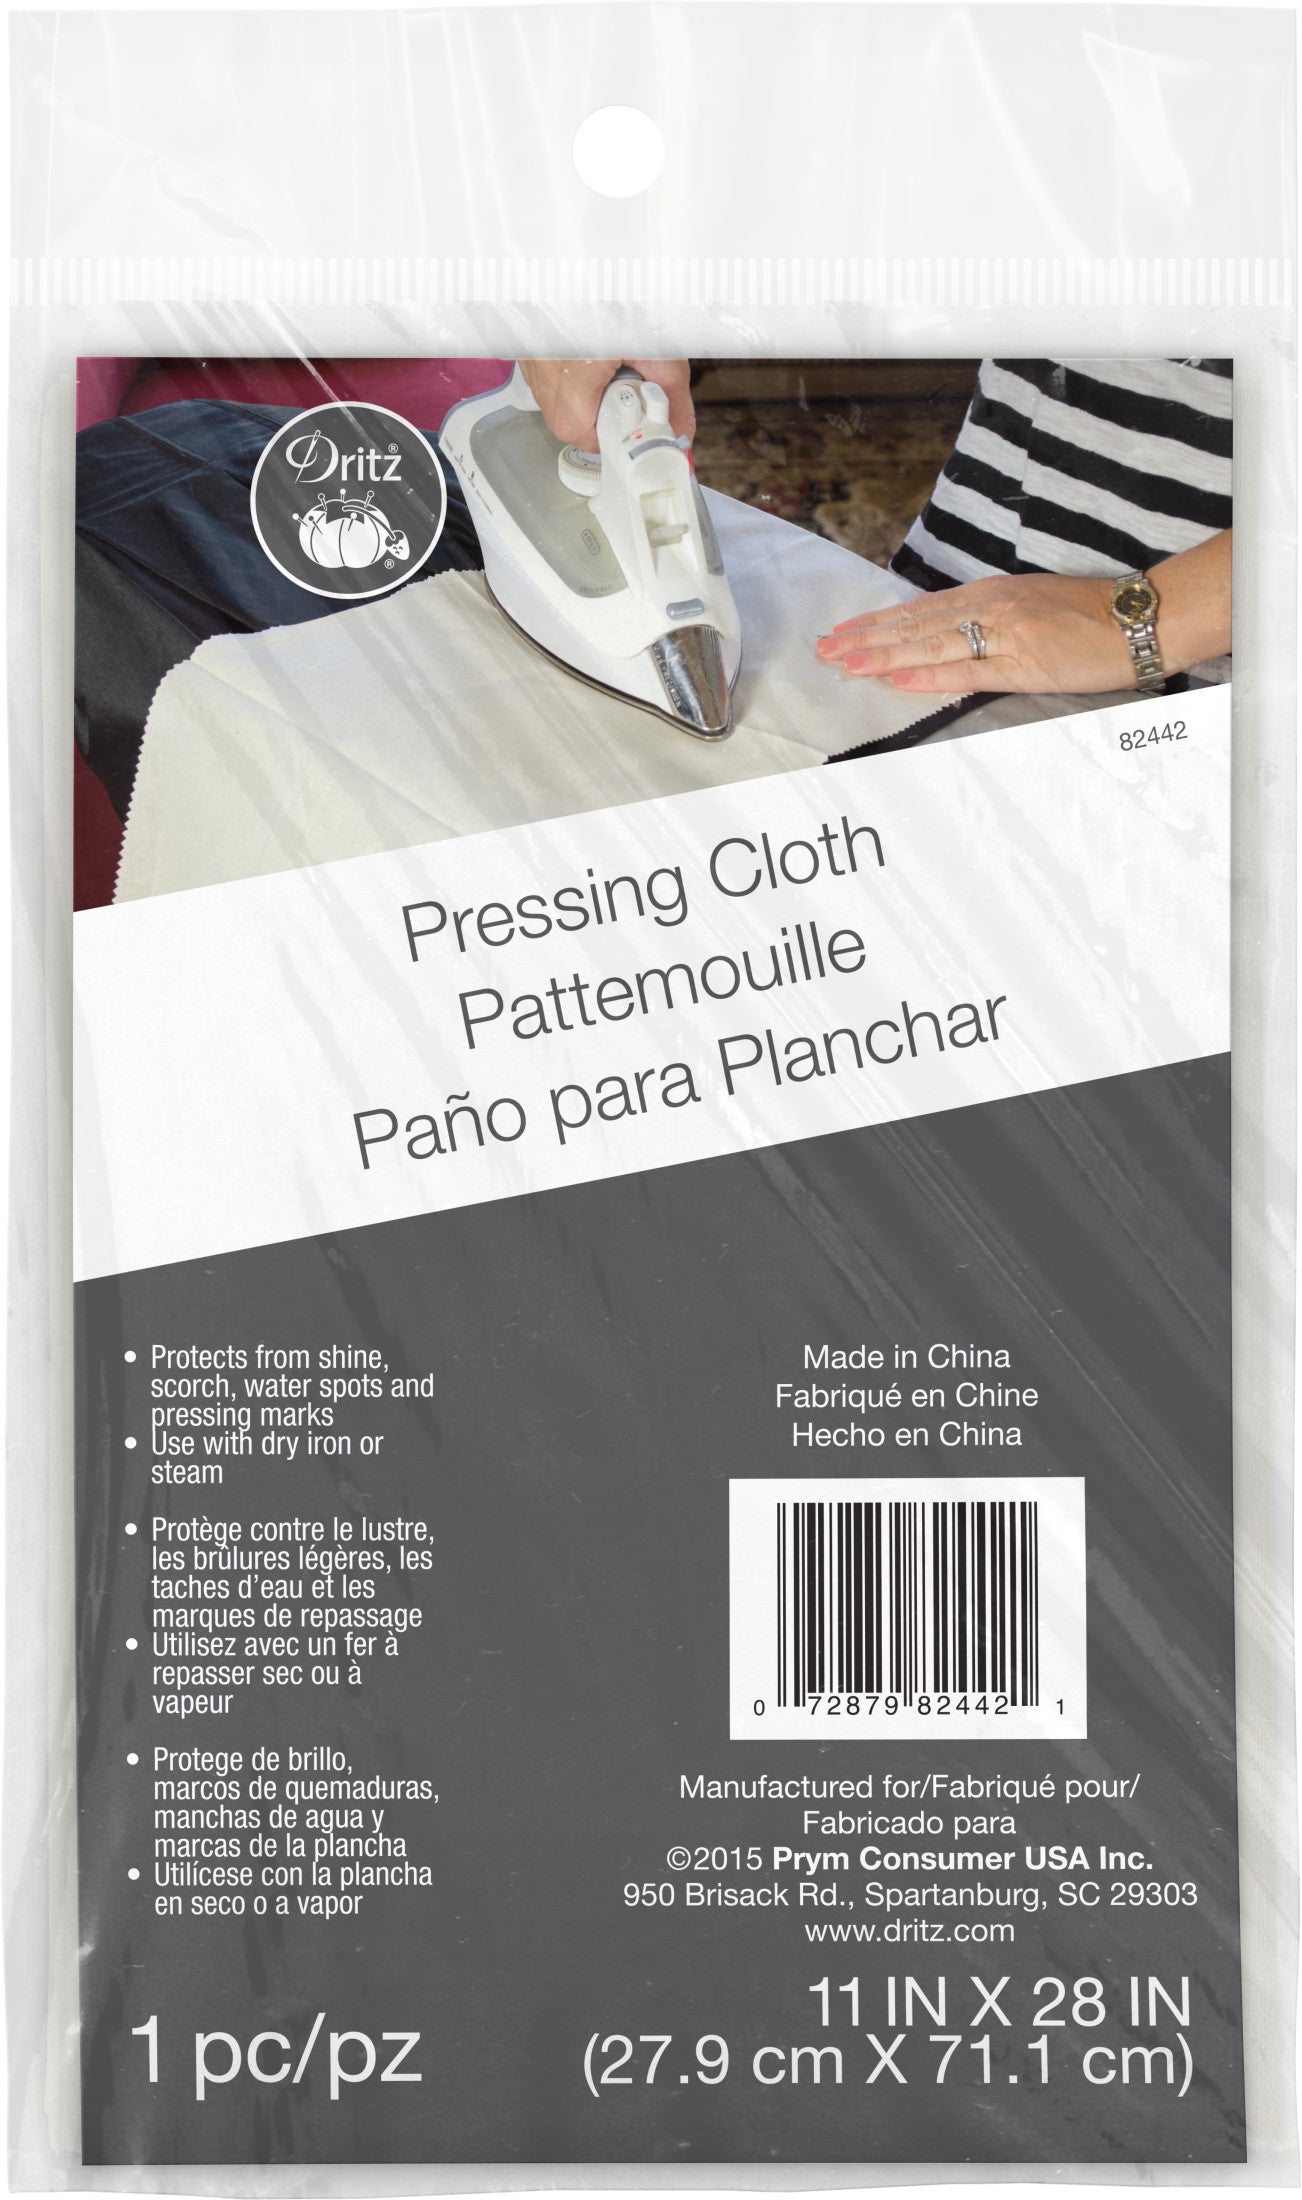 PLANCHA PRYM - The Quilt